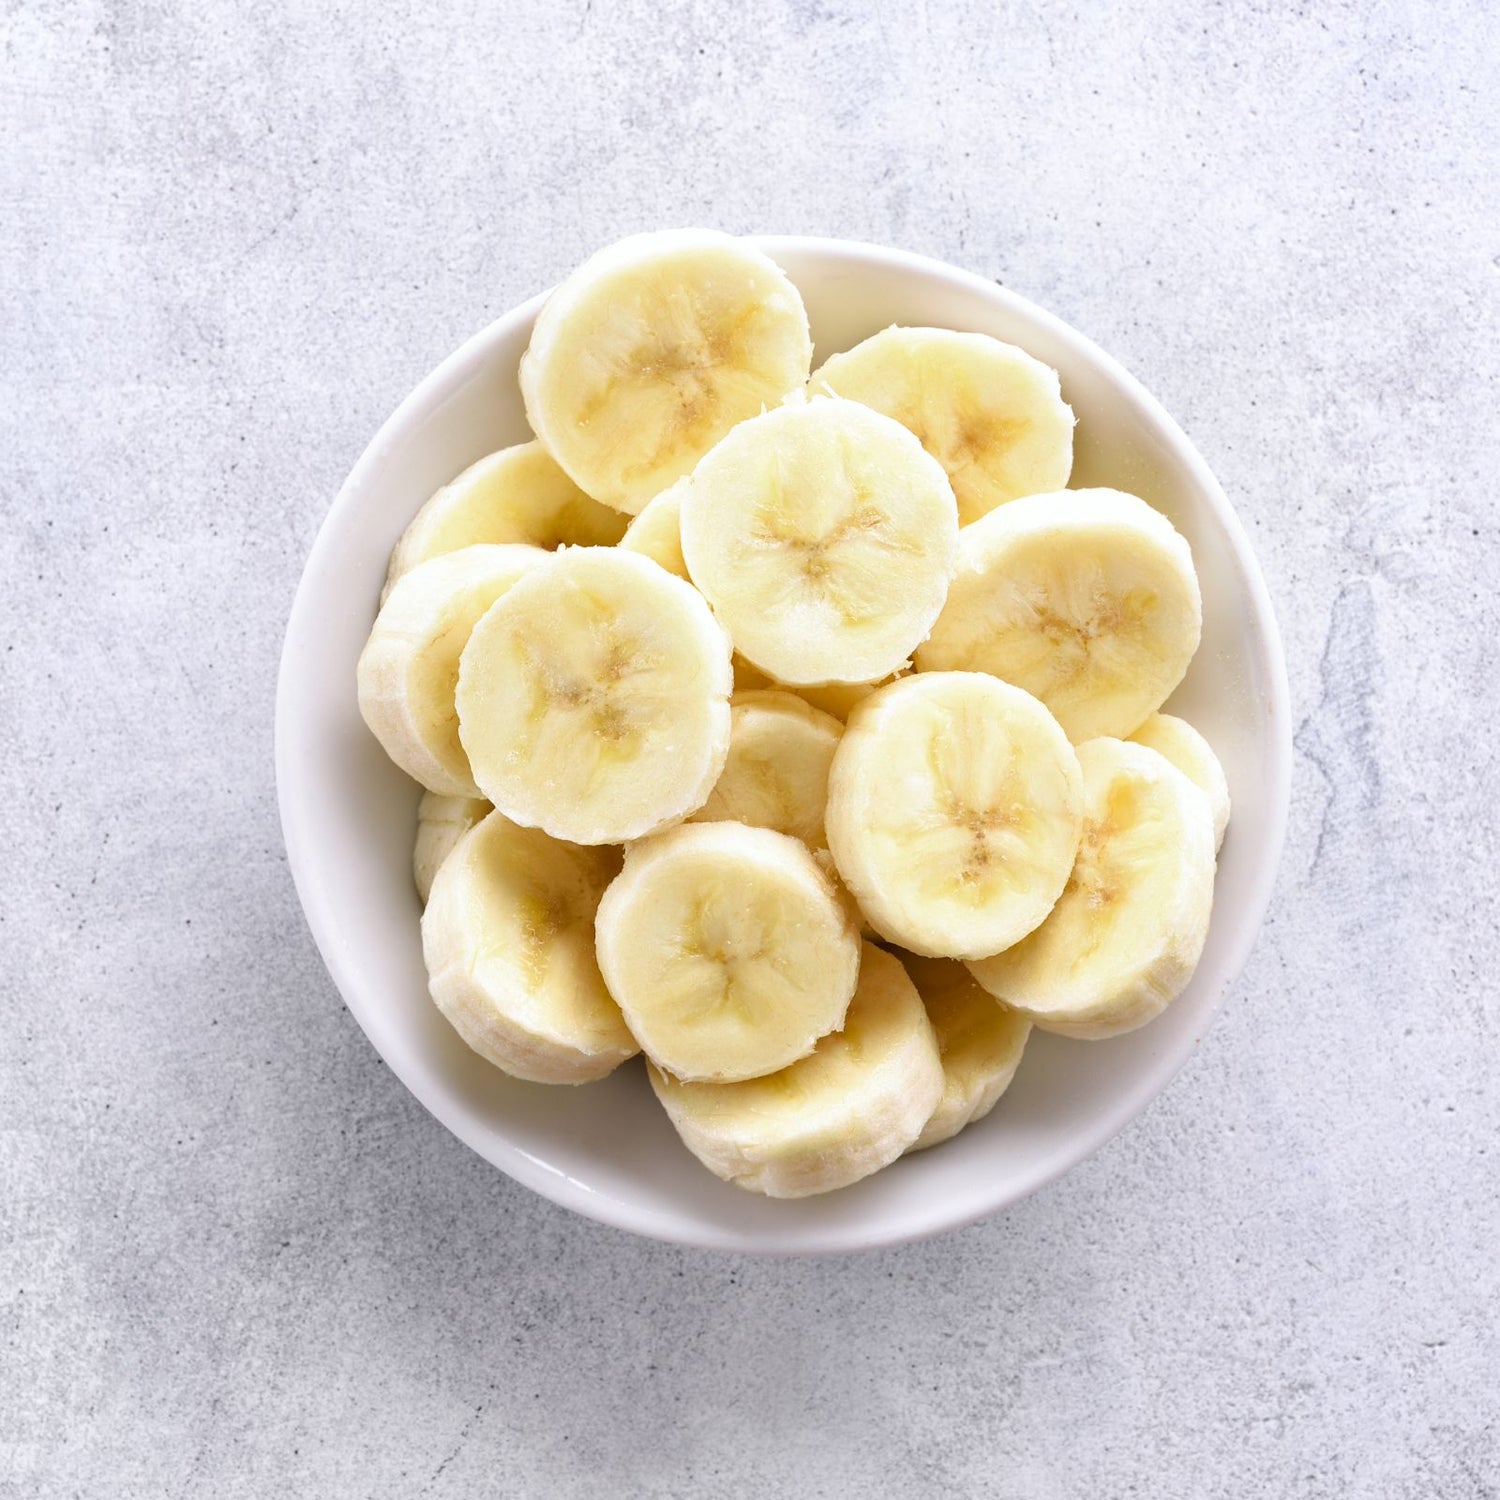 Organic chopped bananas in a bowl